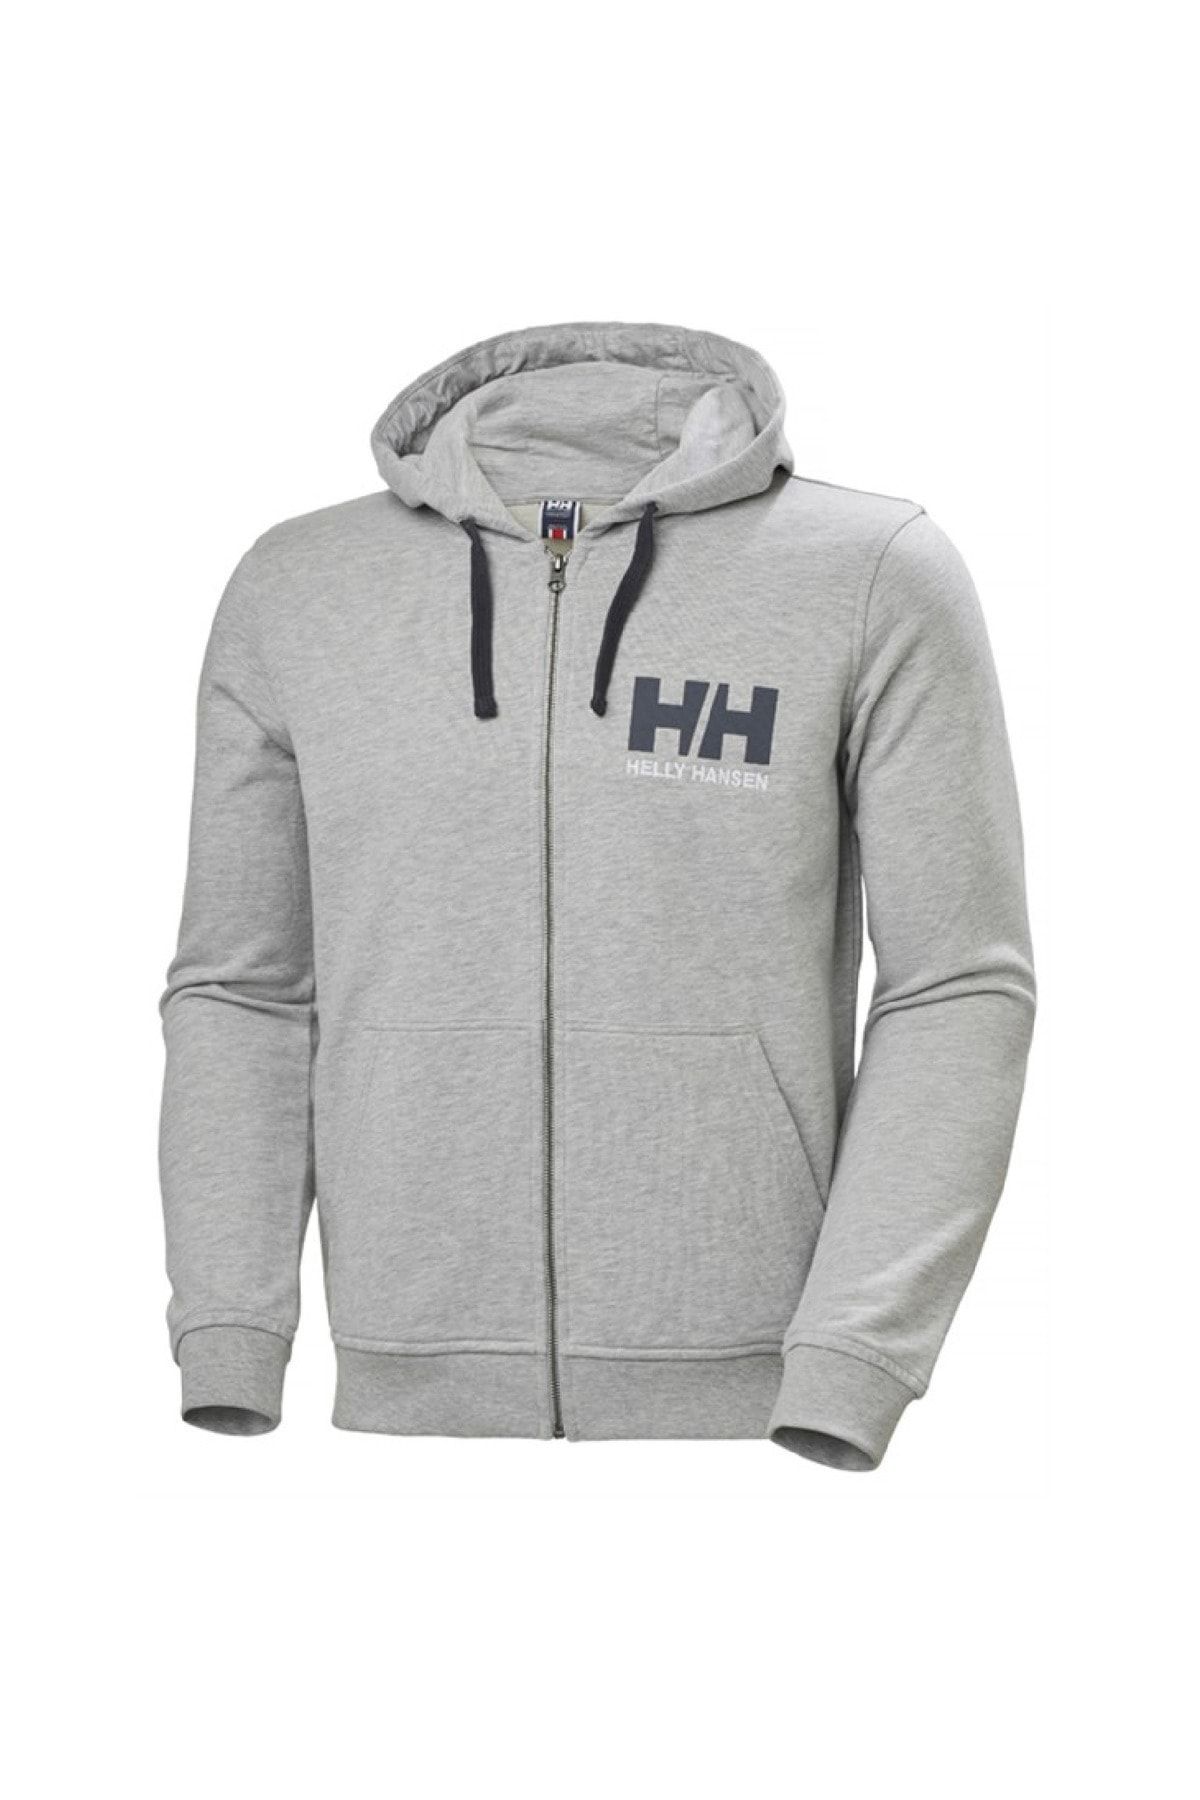 Helly Hansen Hh Logo Full Zip Hoodie Erkek Sweatshirt Hha.34163-9